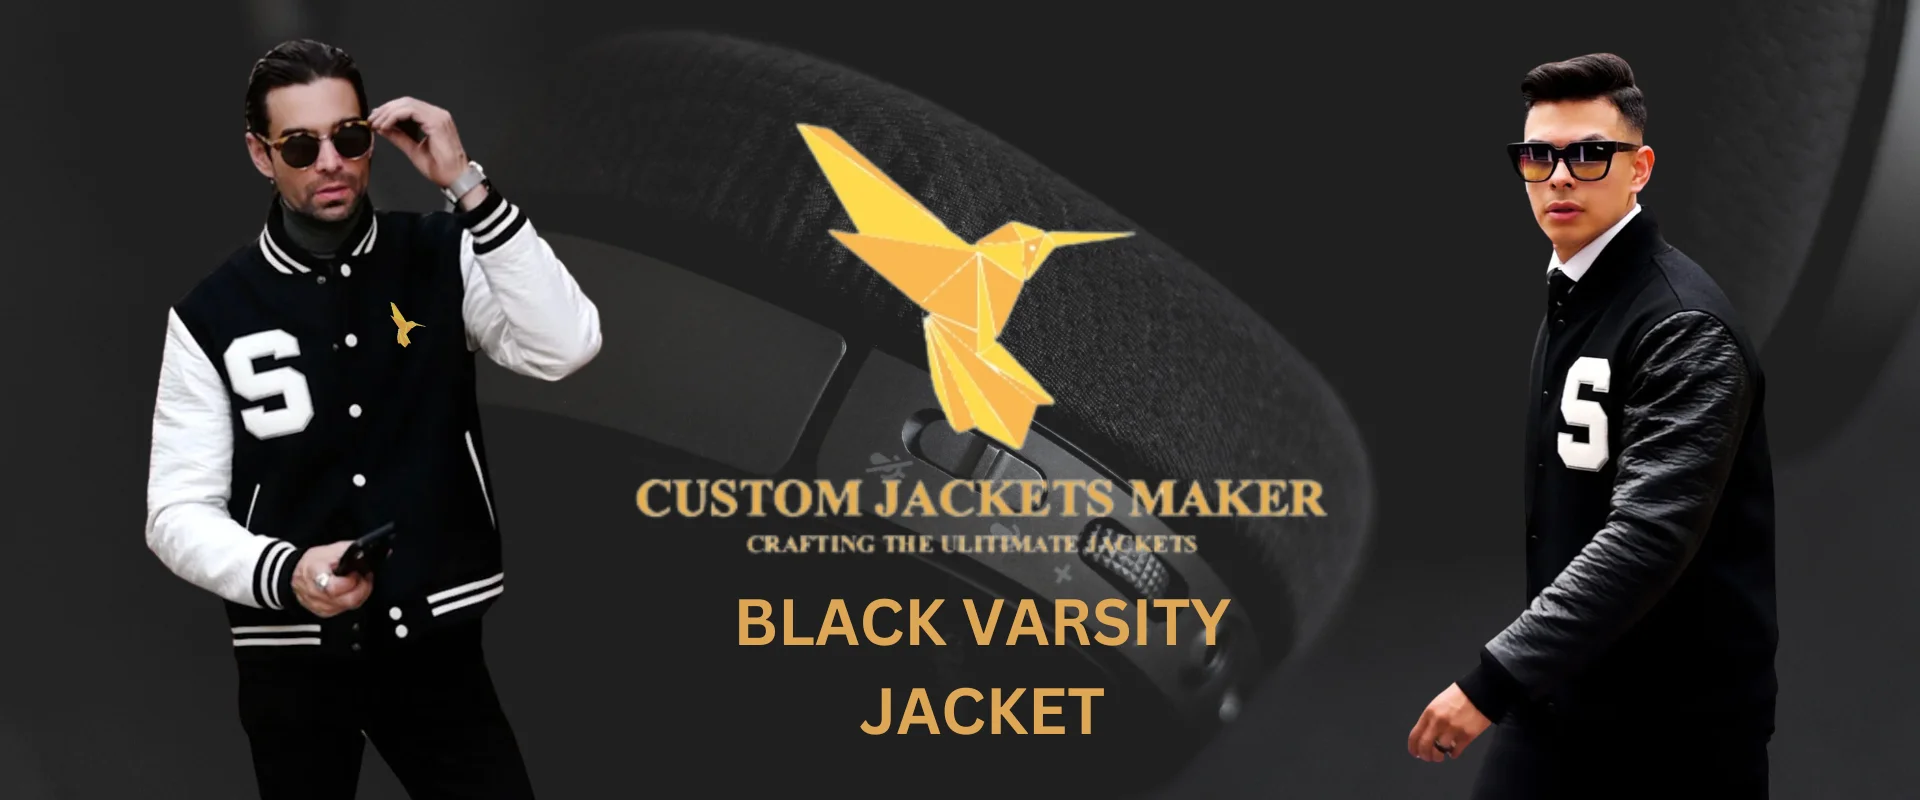 Banner Image of Black Varsity Jacket